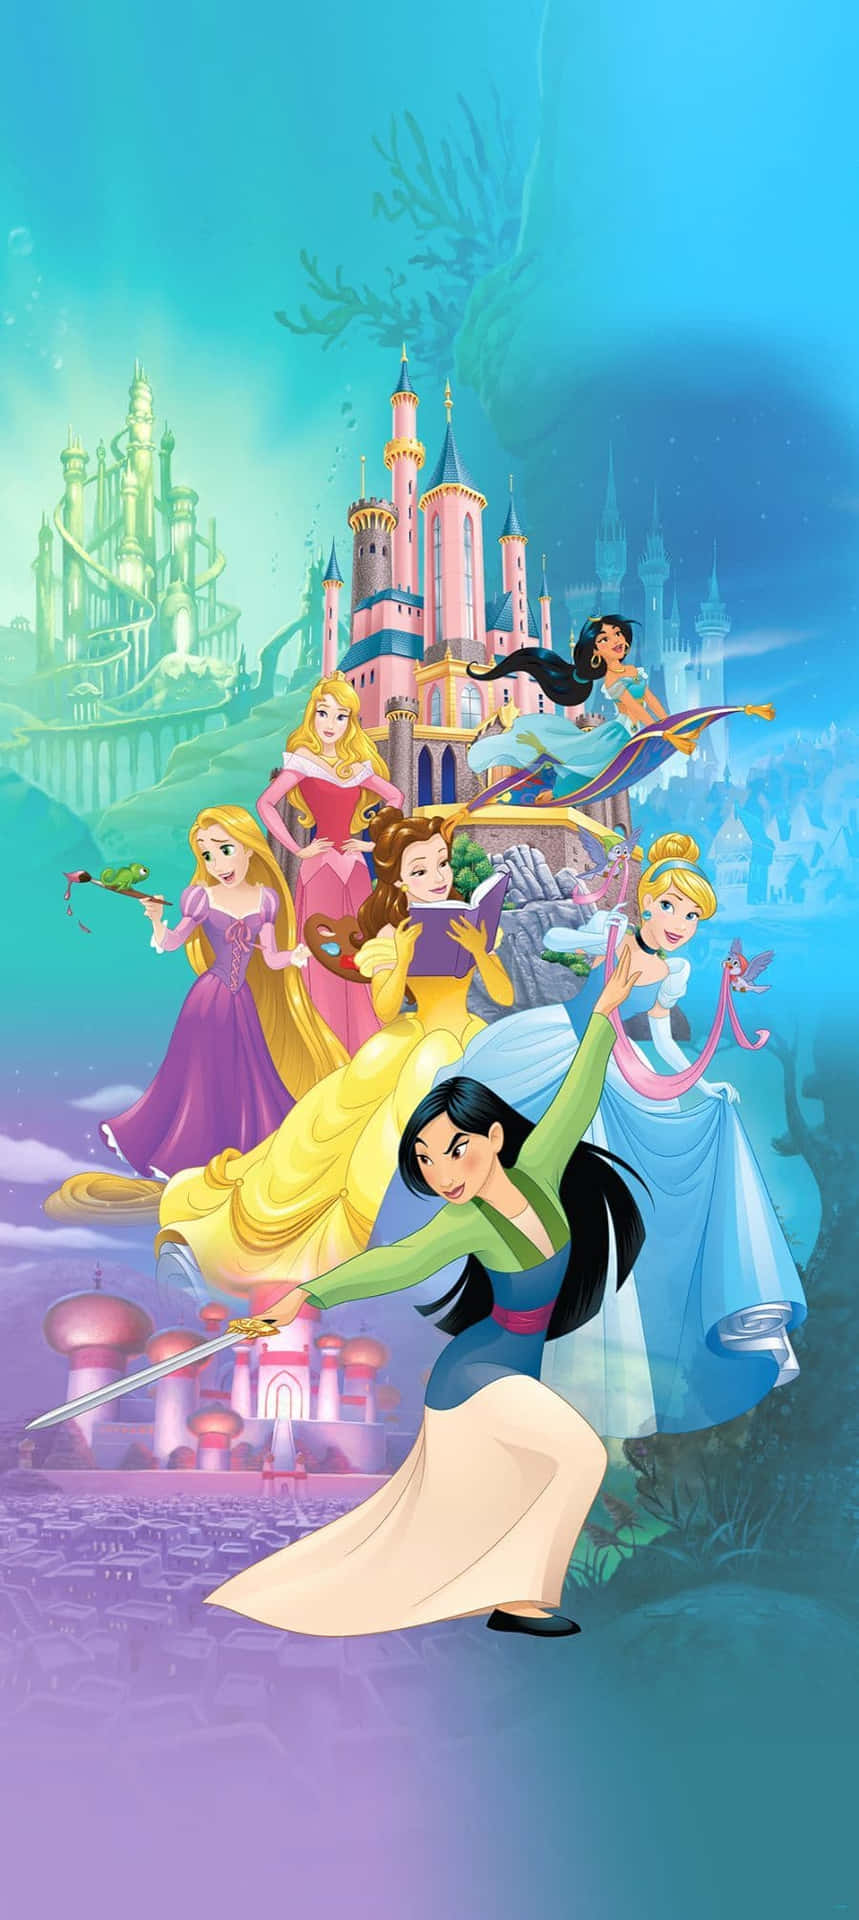 Esplorai Fantastici Mondi Di Sua Maestà - Disney Princess Experience